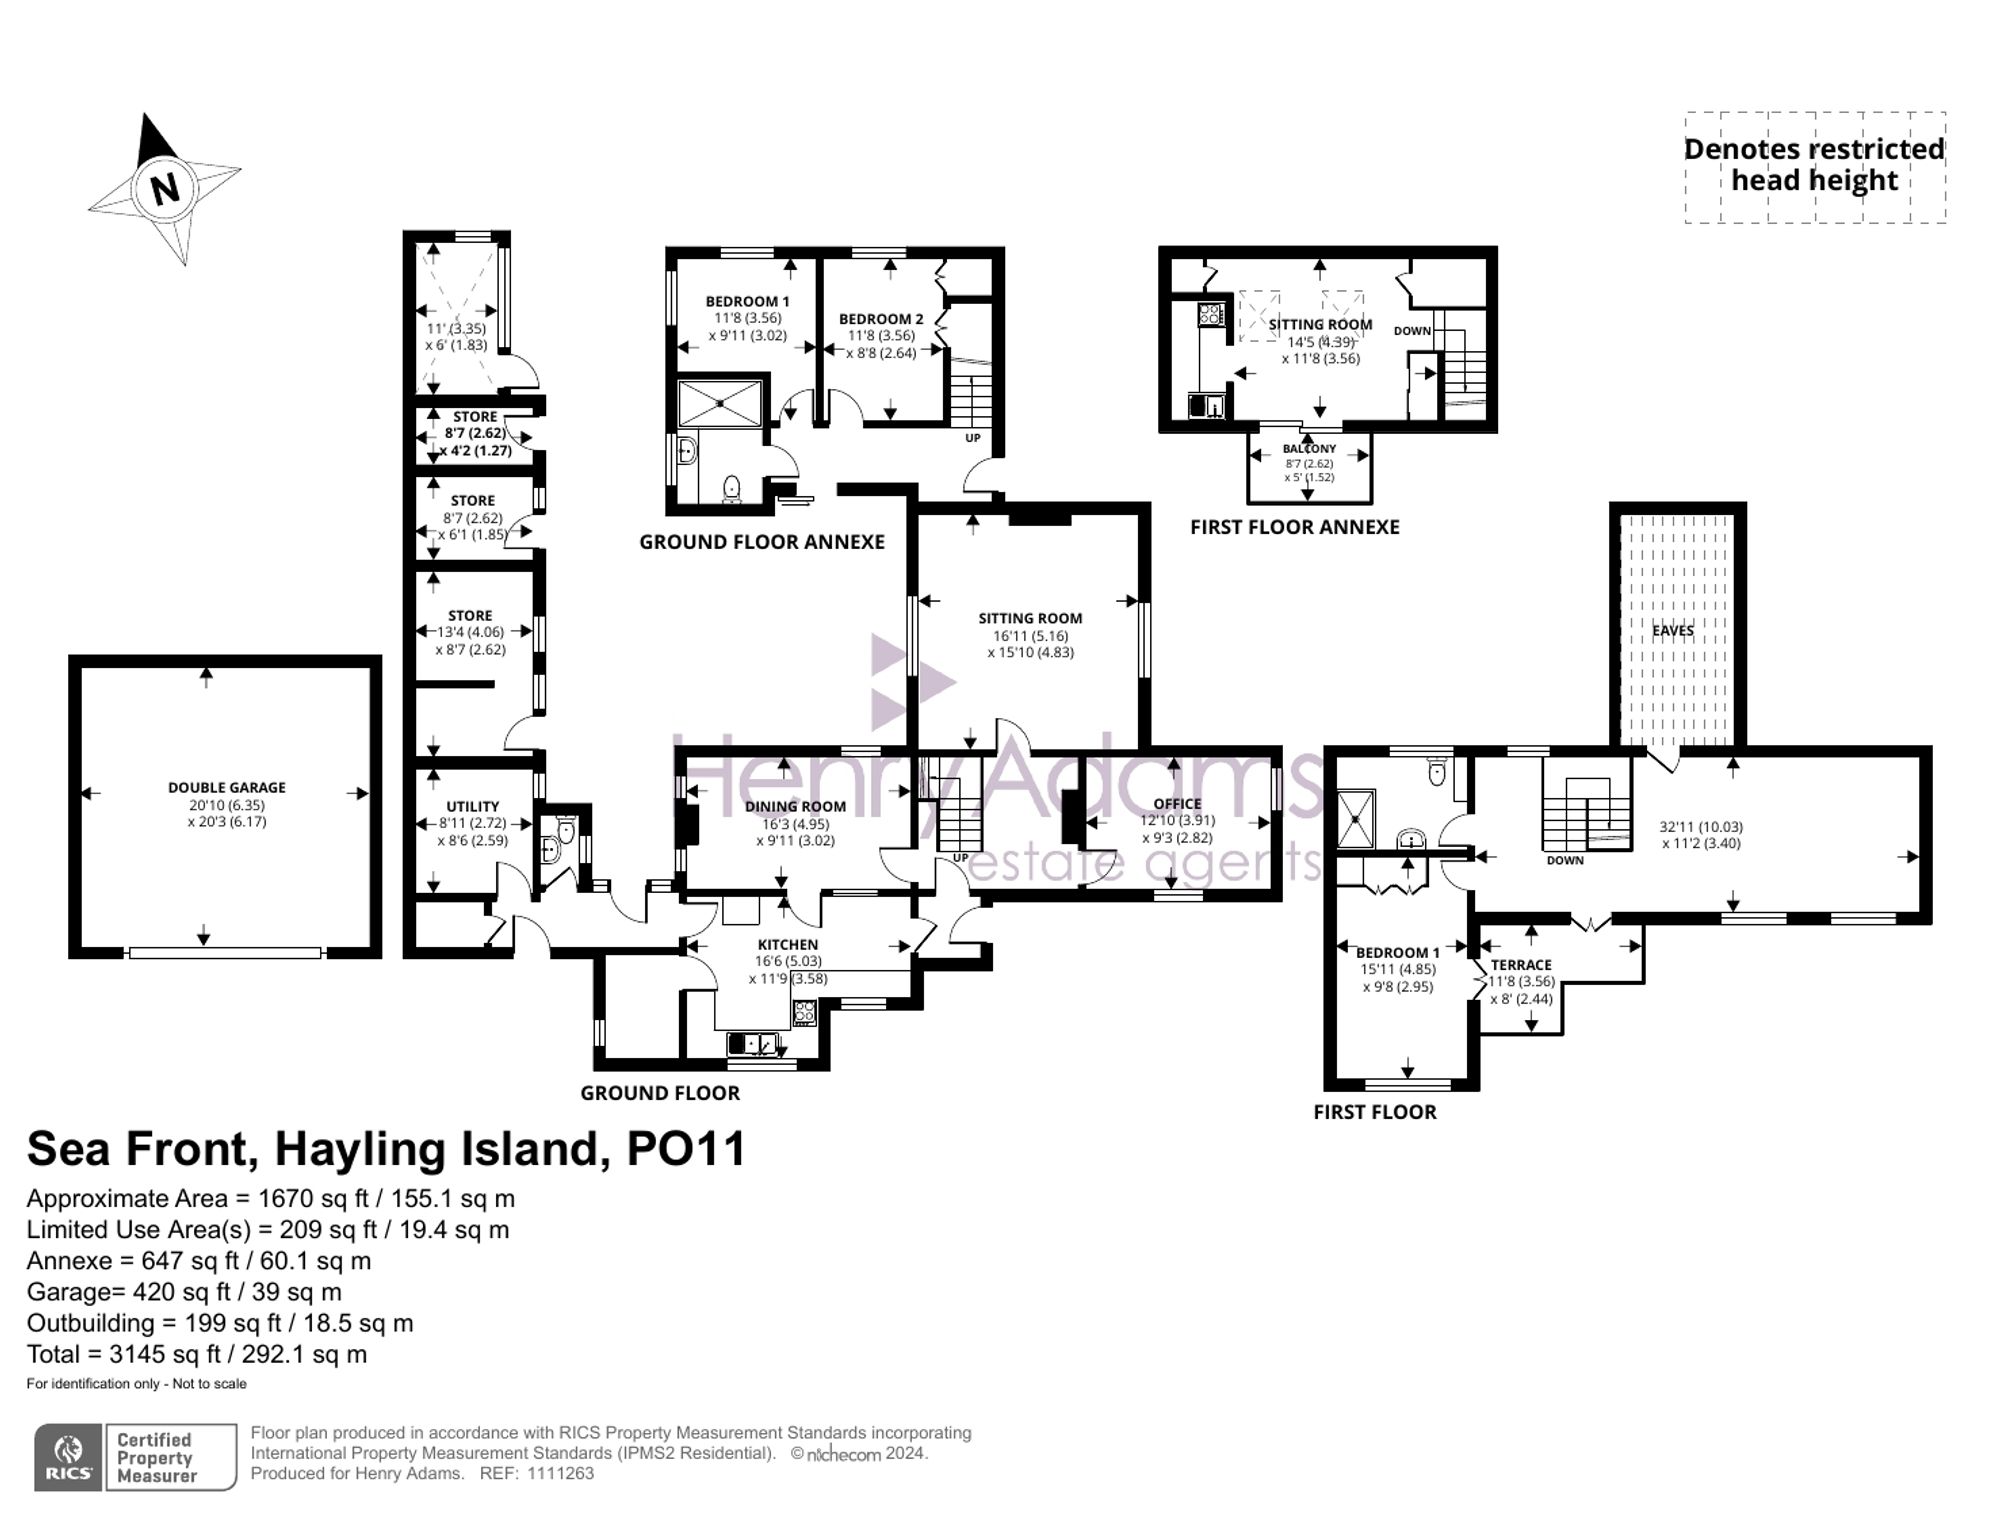 Sea Front, Hayling Island, PO11 floorplans